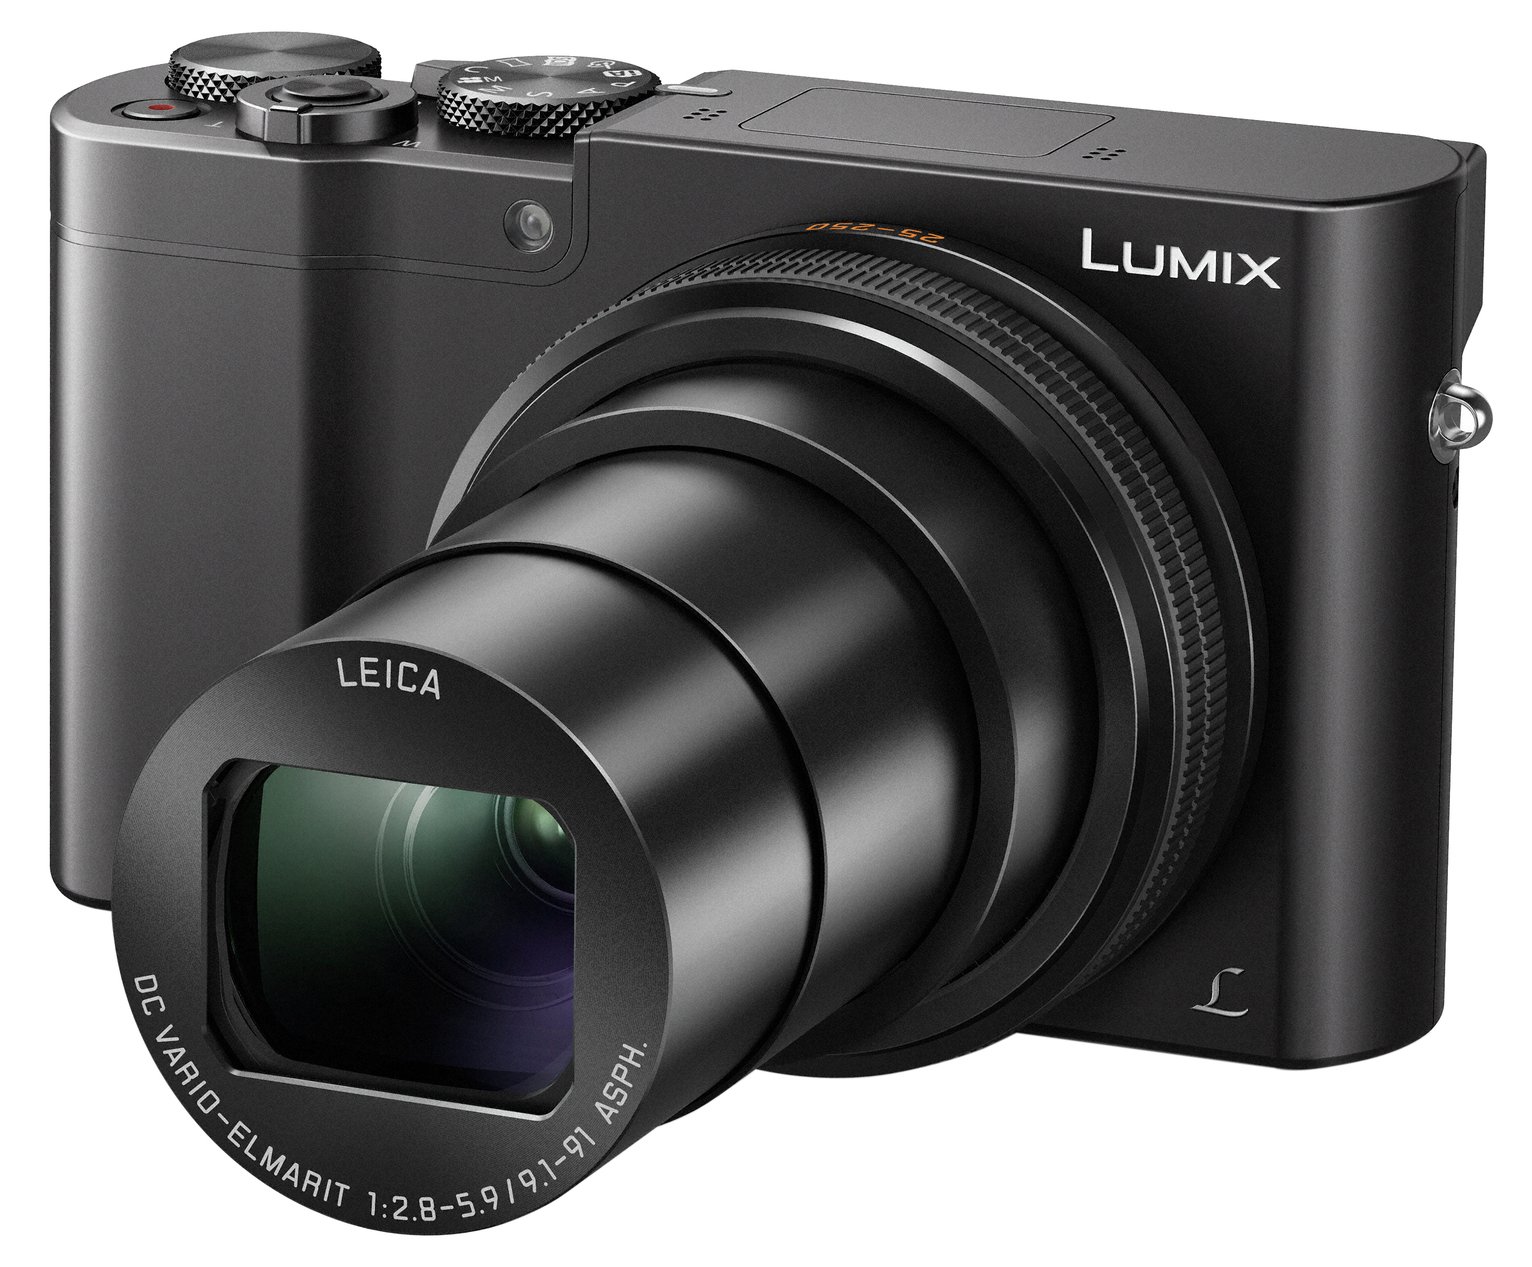 Panasonic Lumix DC-TZ100 Superzoom Compact Camera Review